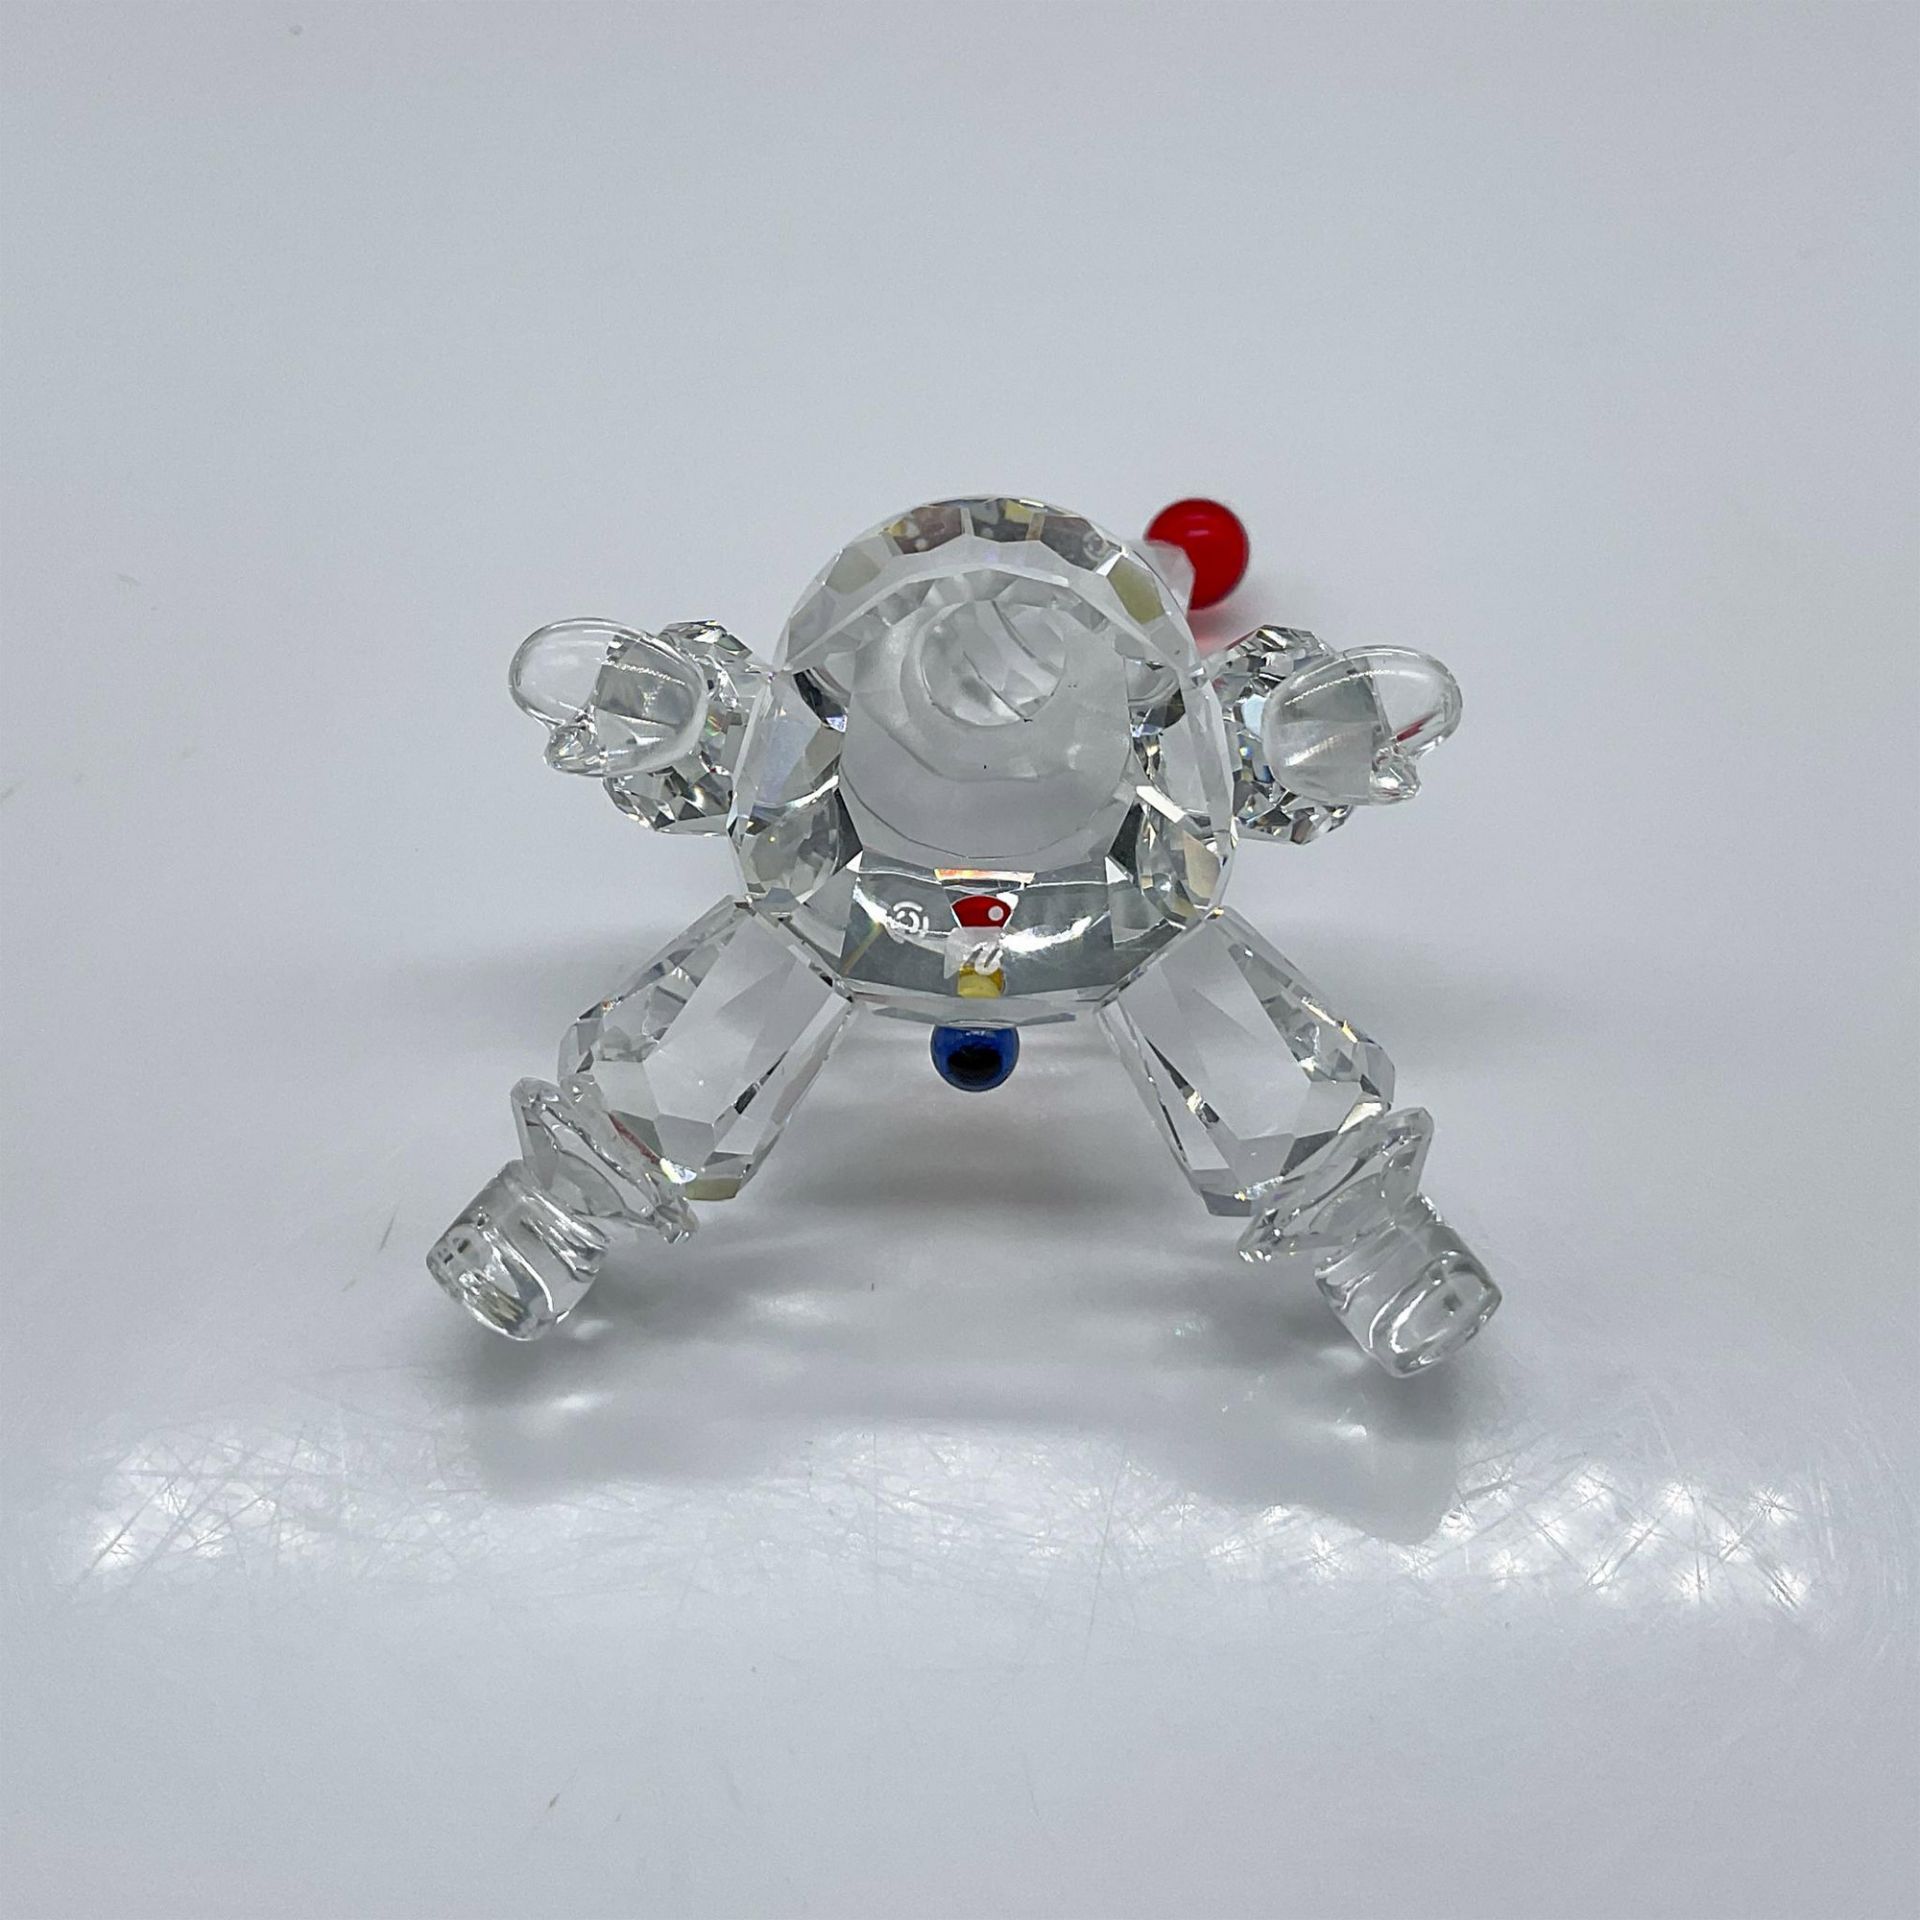 Swarovski Silver Crystal Figurine, Puppet - Image 4 of 4